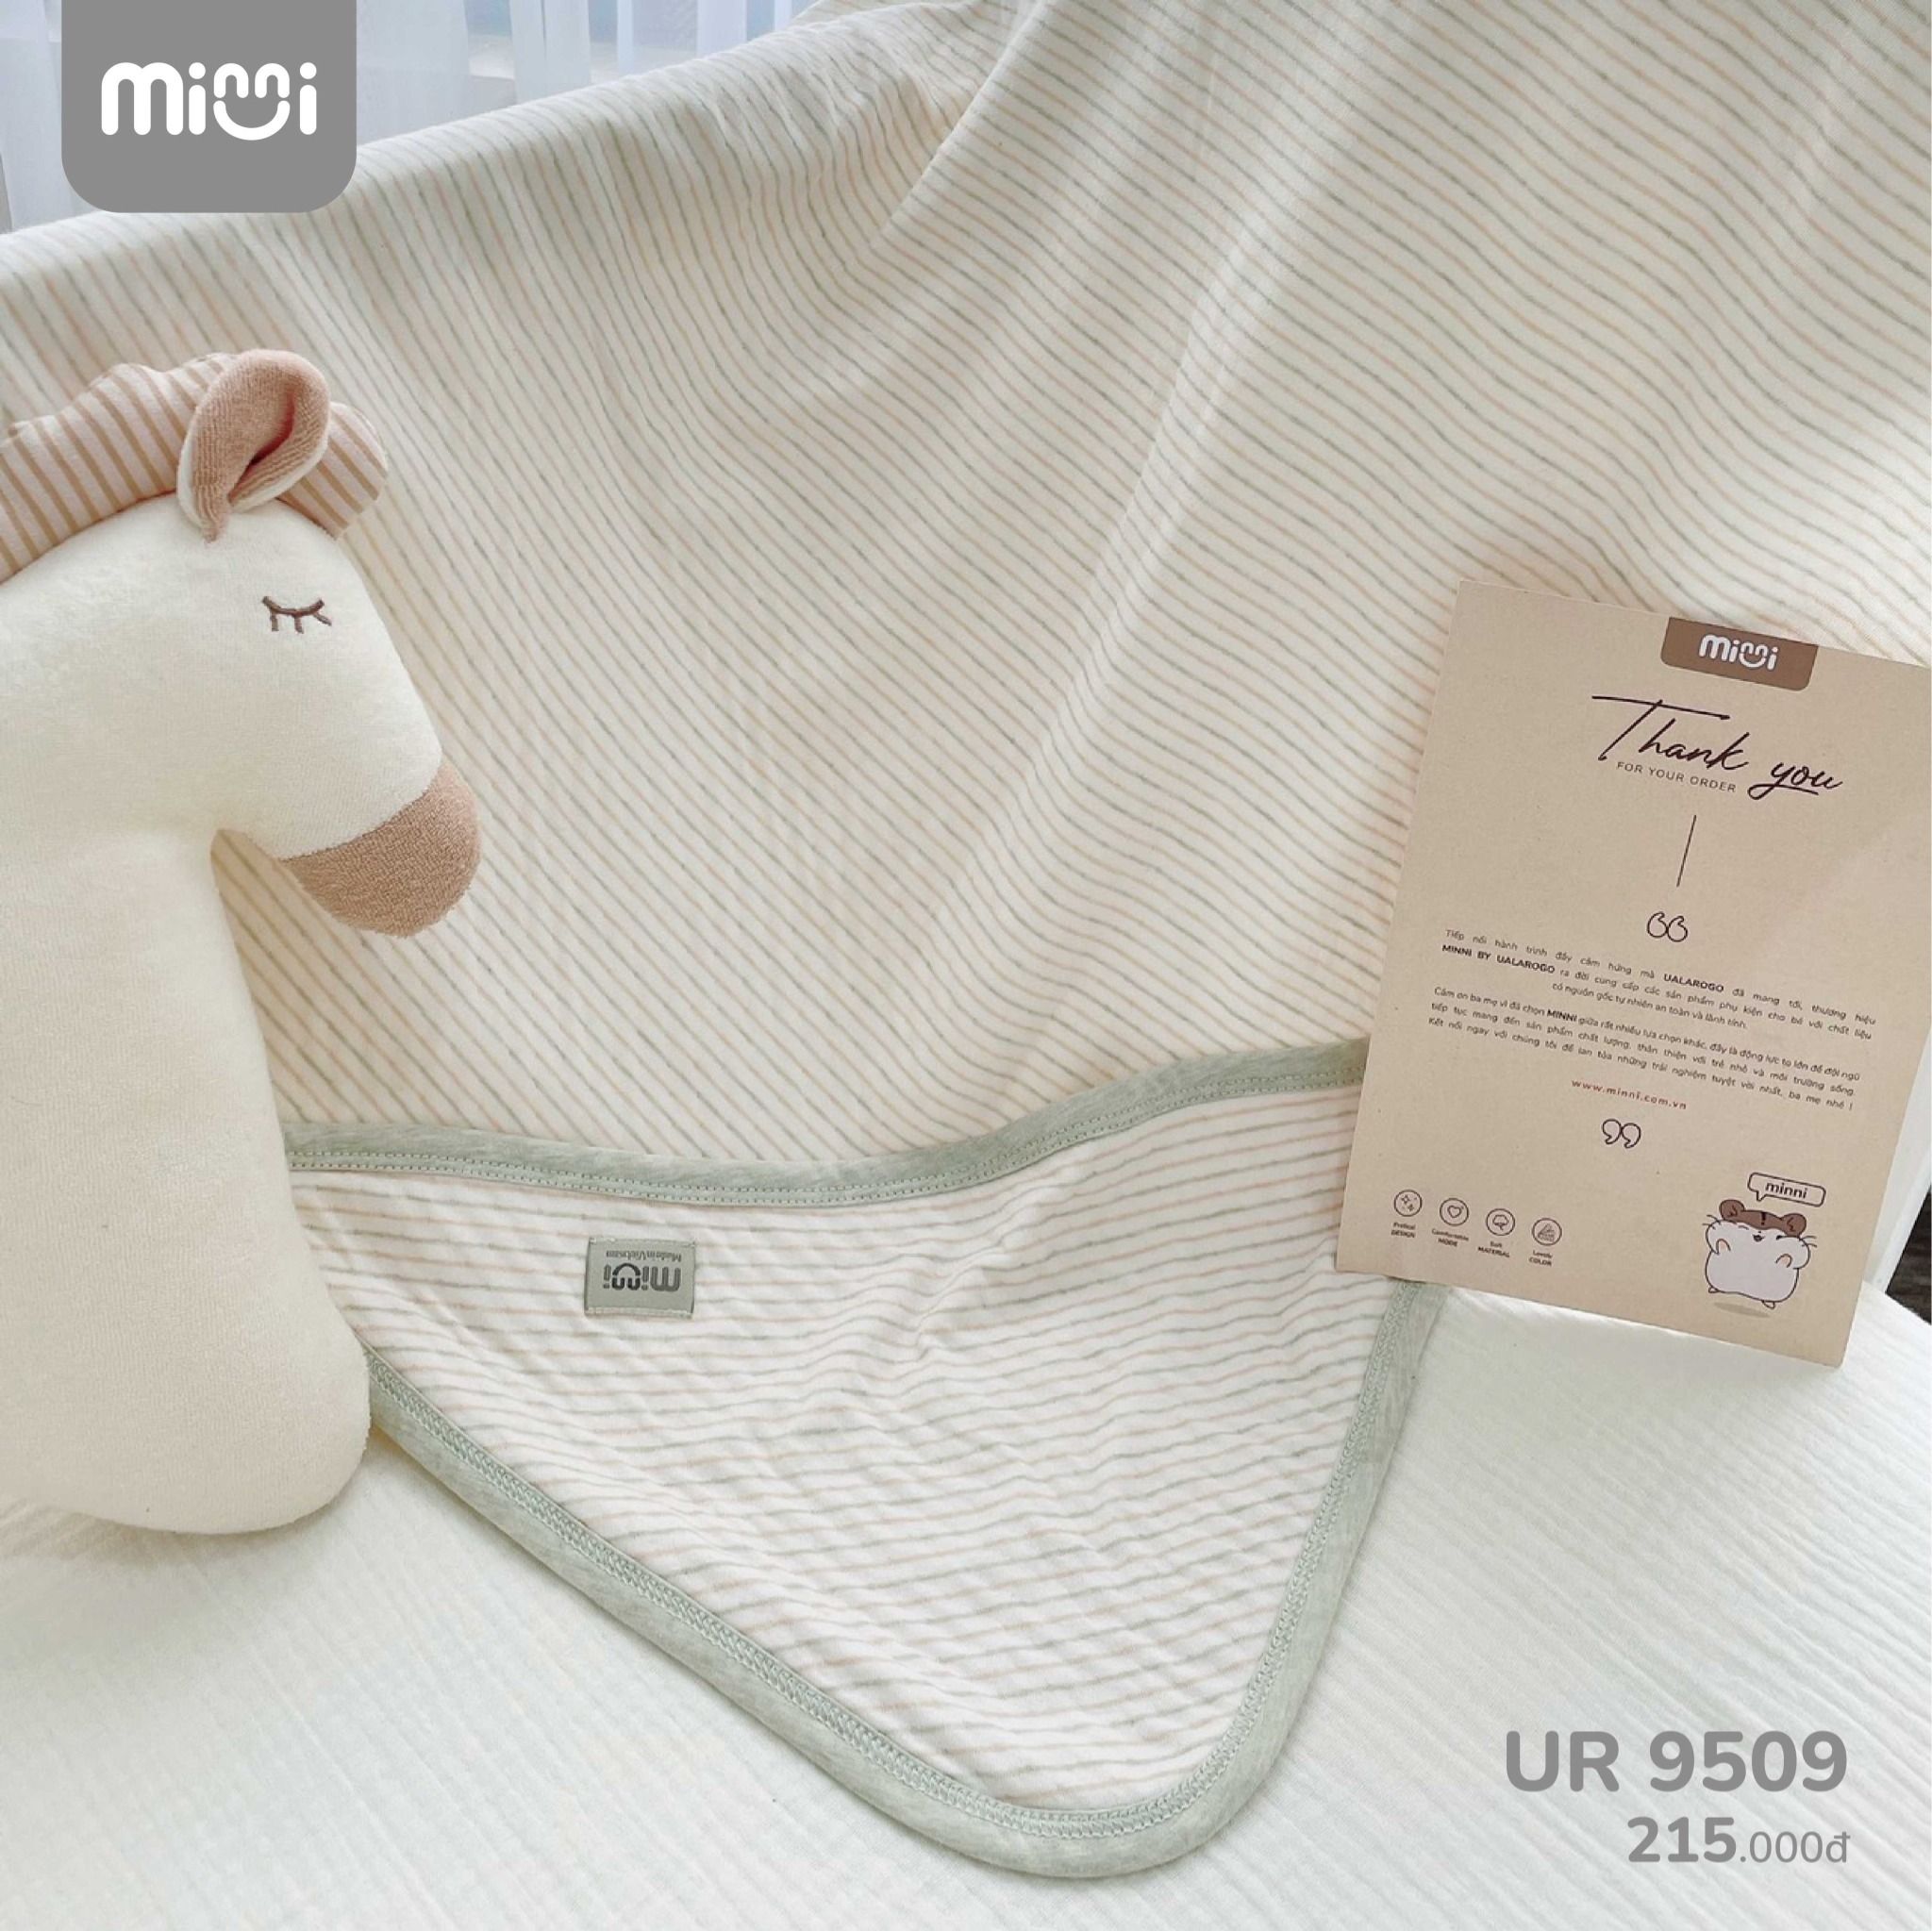  Chăn ủ  Minni Organic Cotton UR 9509 